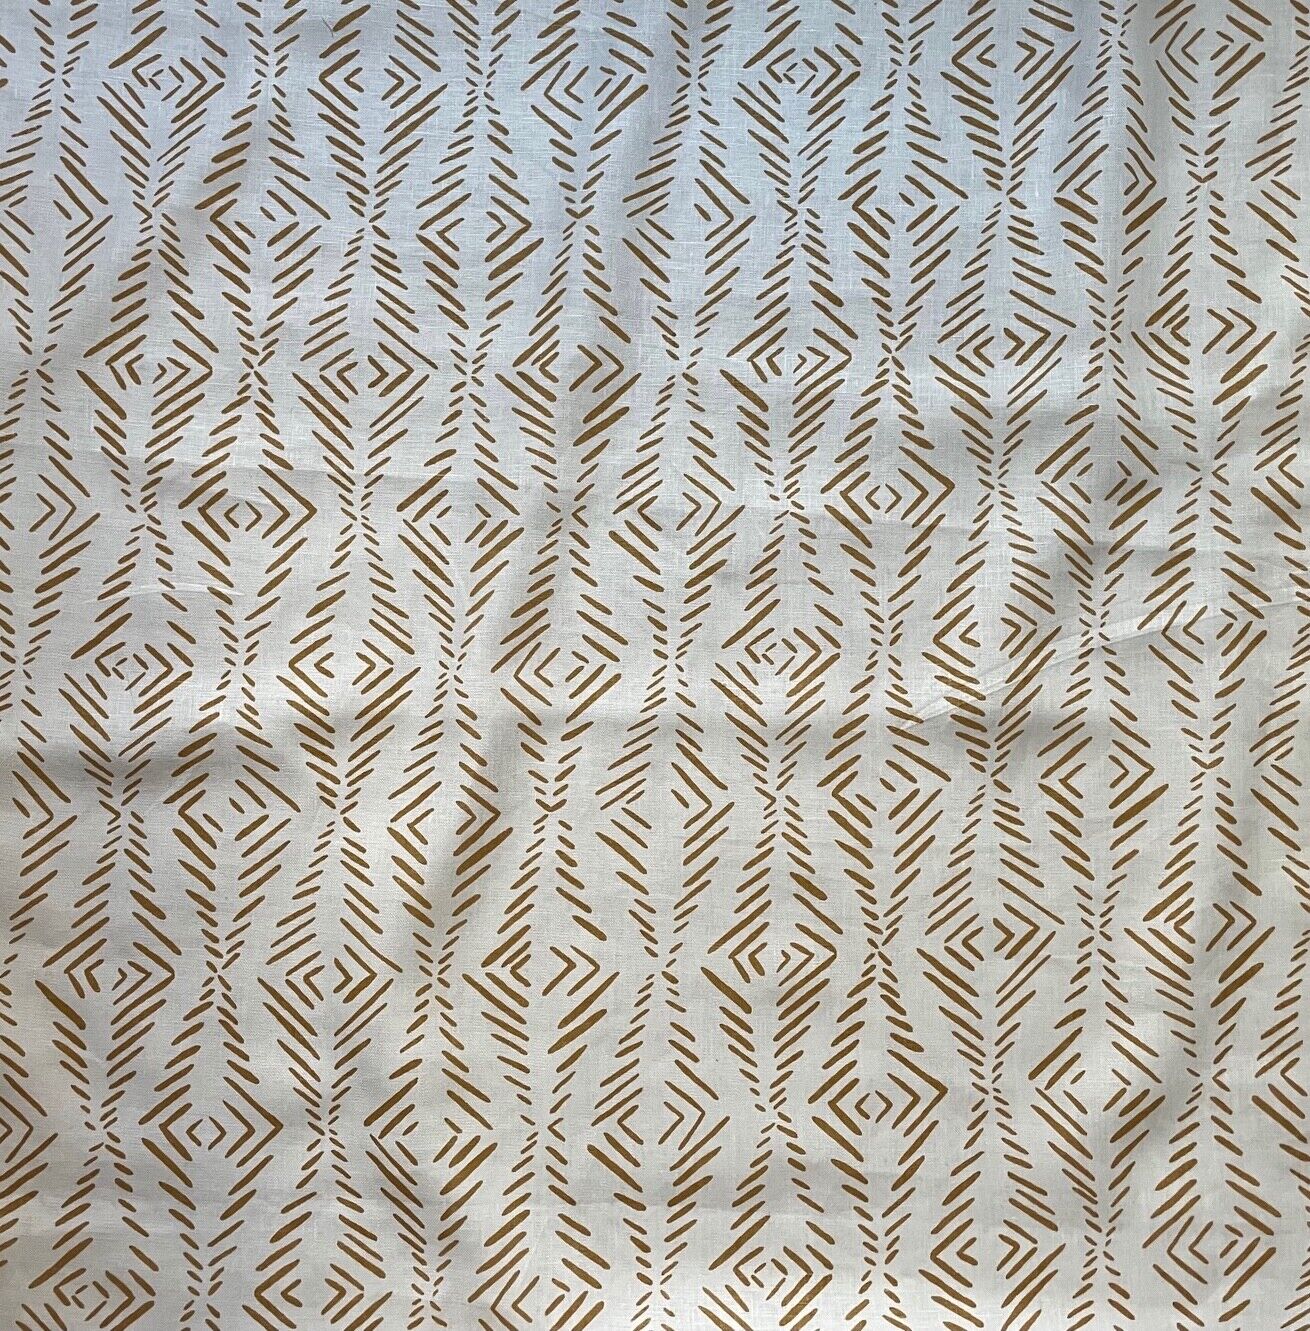 FABRICUT Retrograde mustard printed linen geometric tribal global India 3+ yds